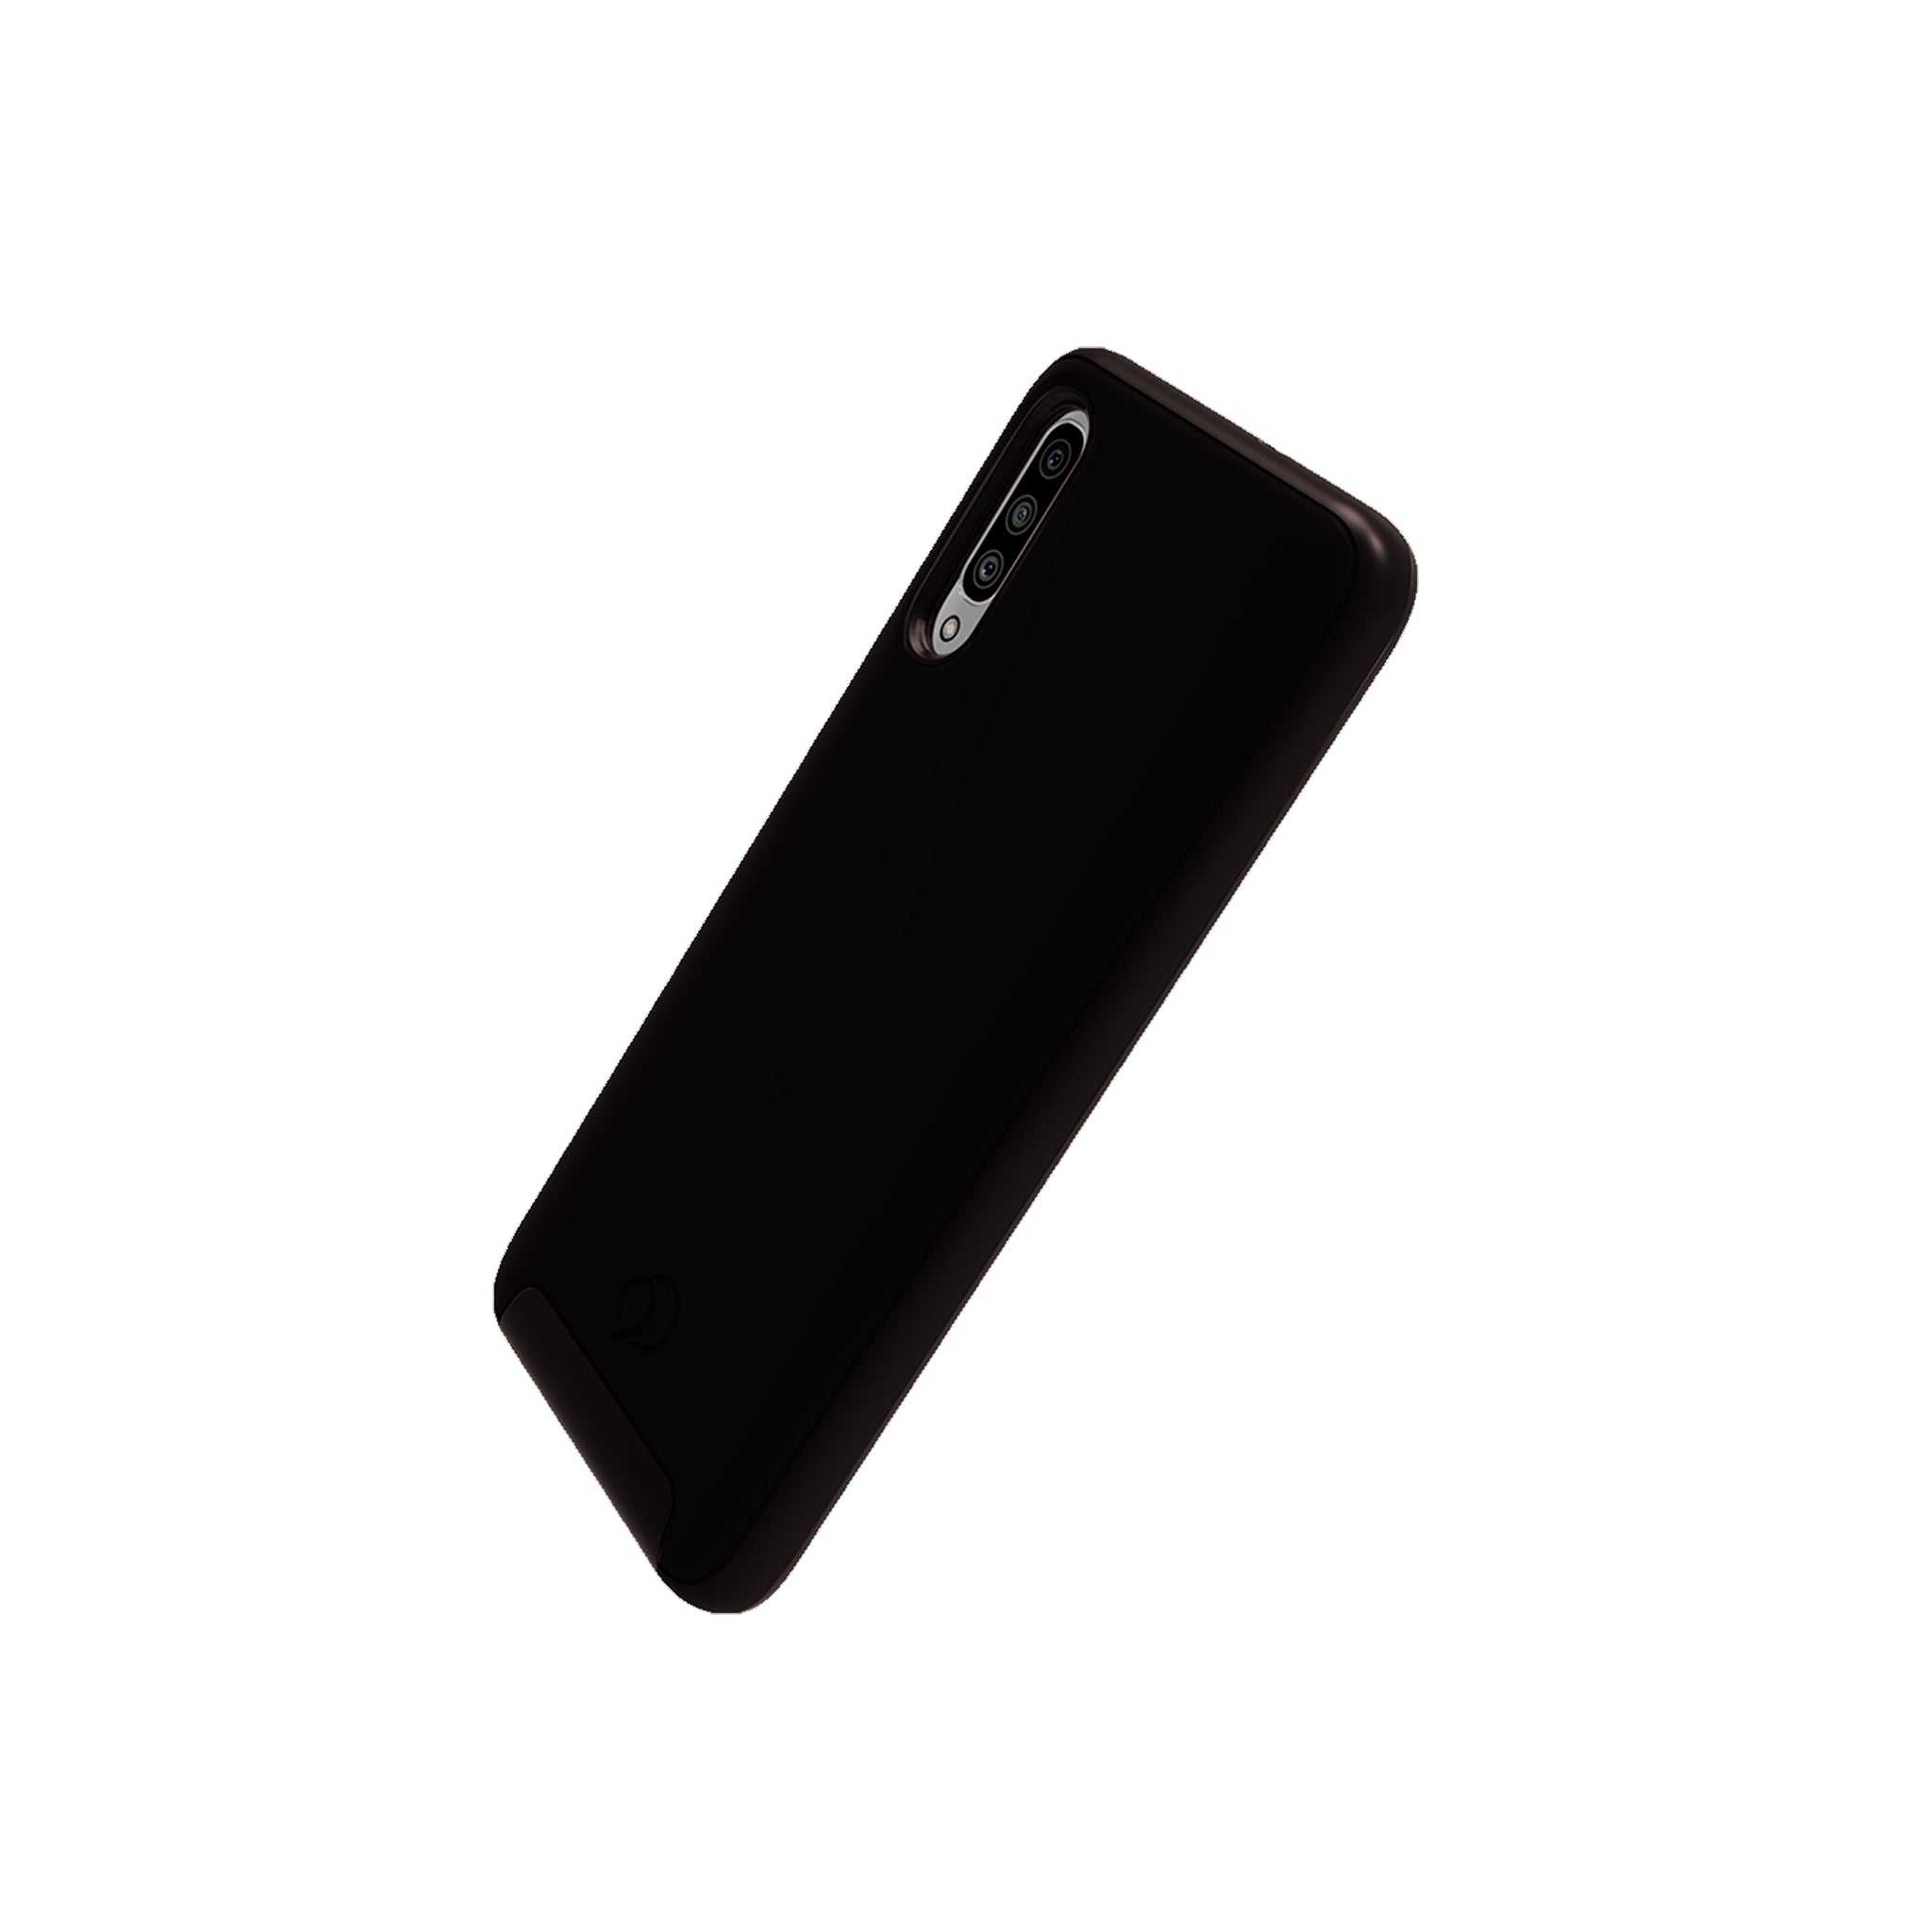 Nimbus9 - Cirrus 2 Case For Samsung Galaxy A50 - Black